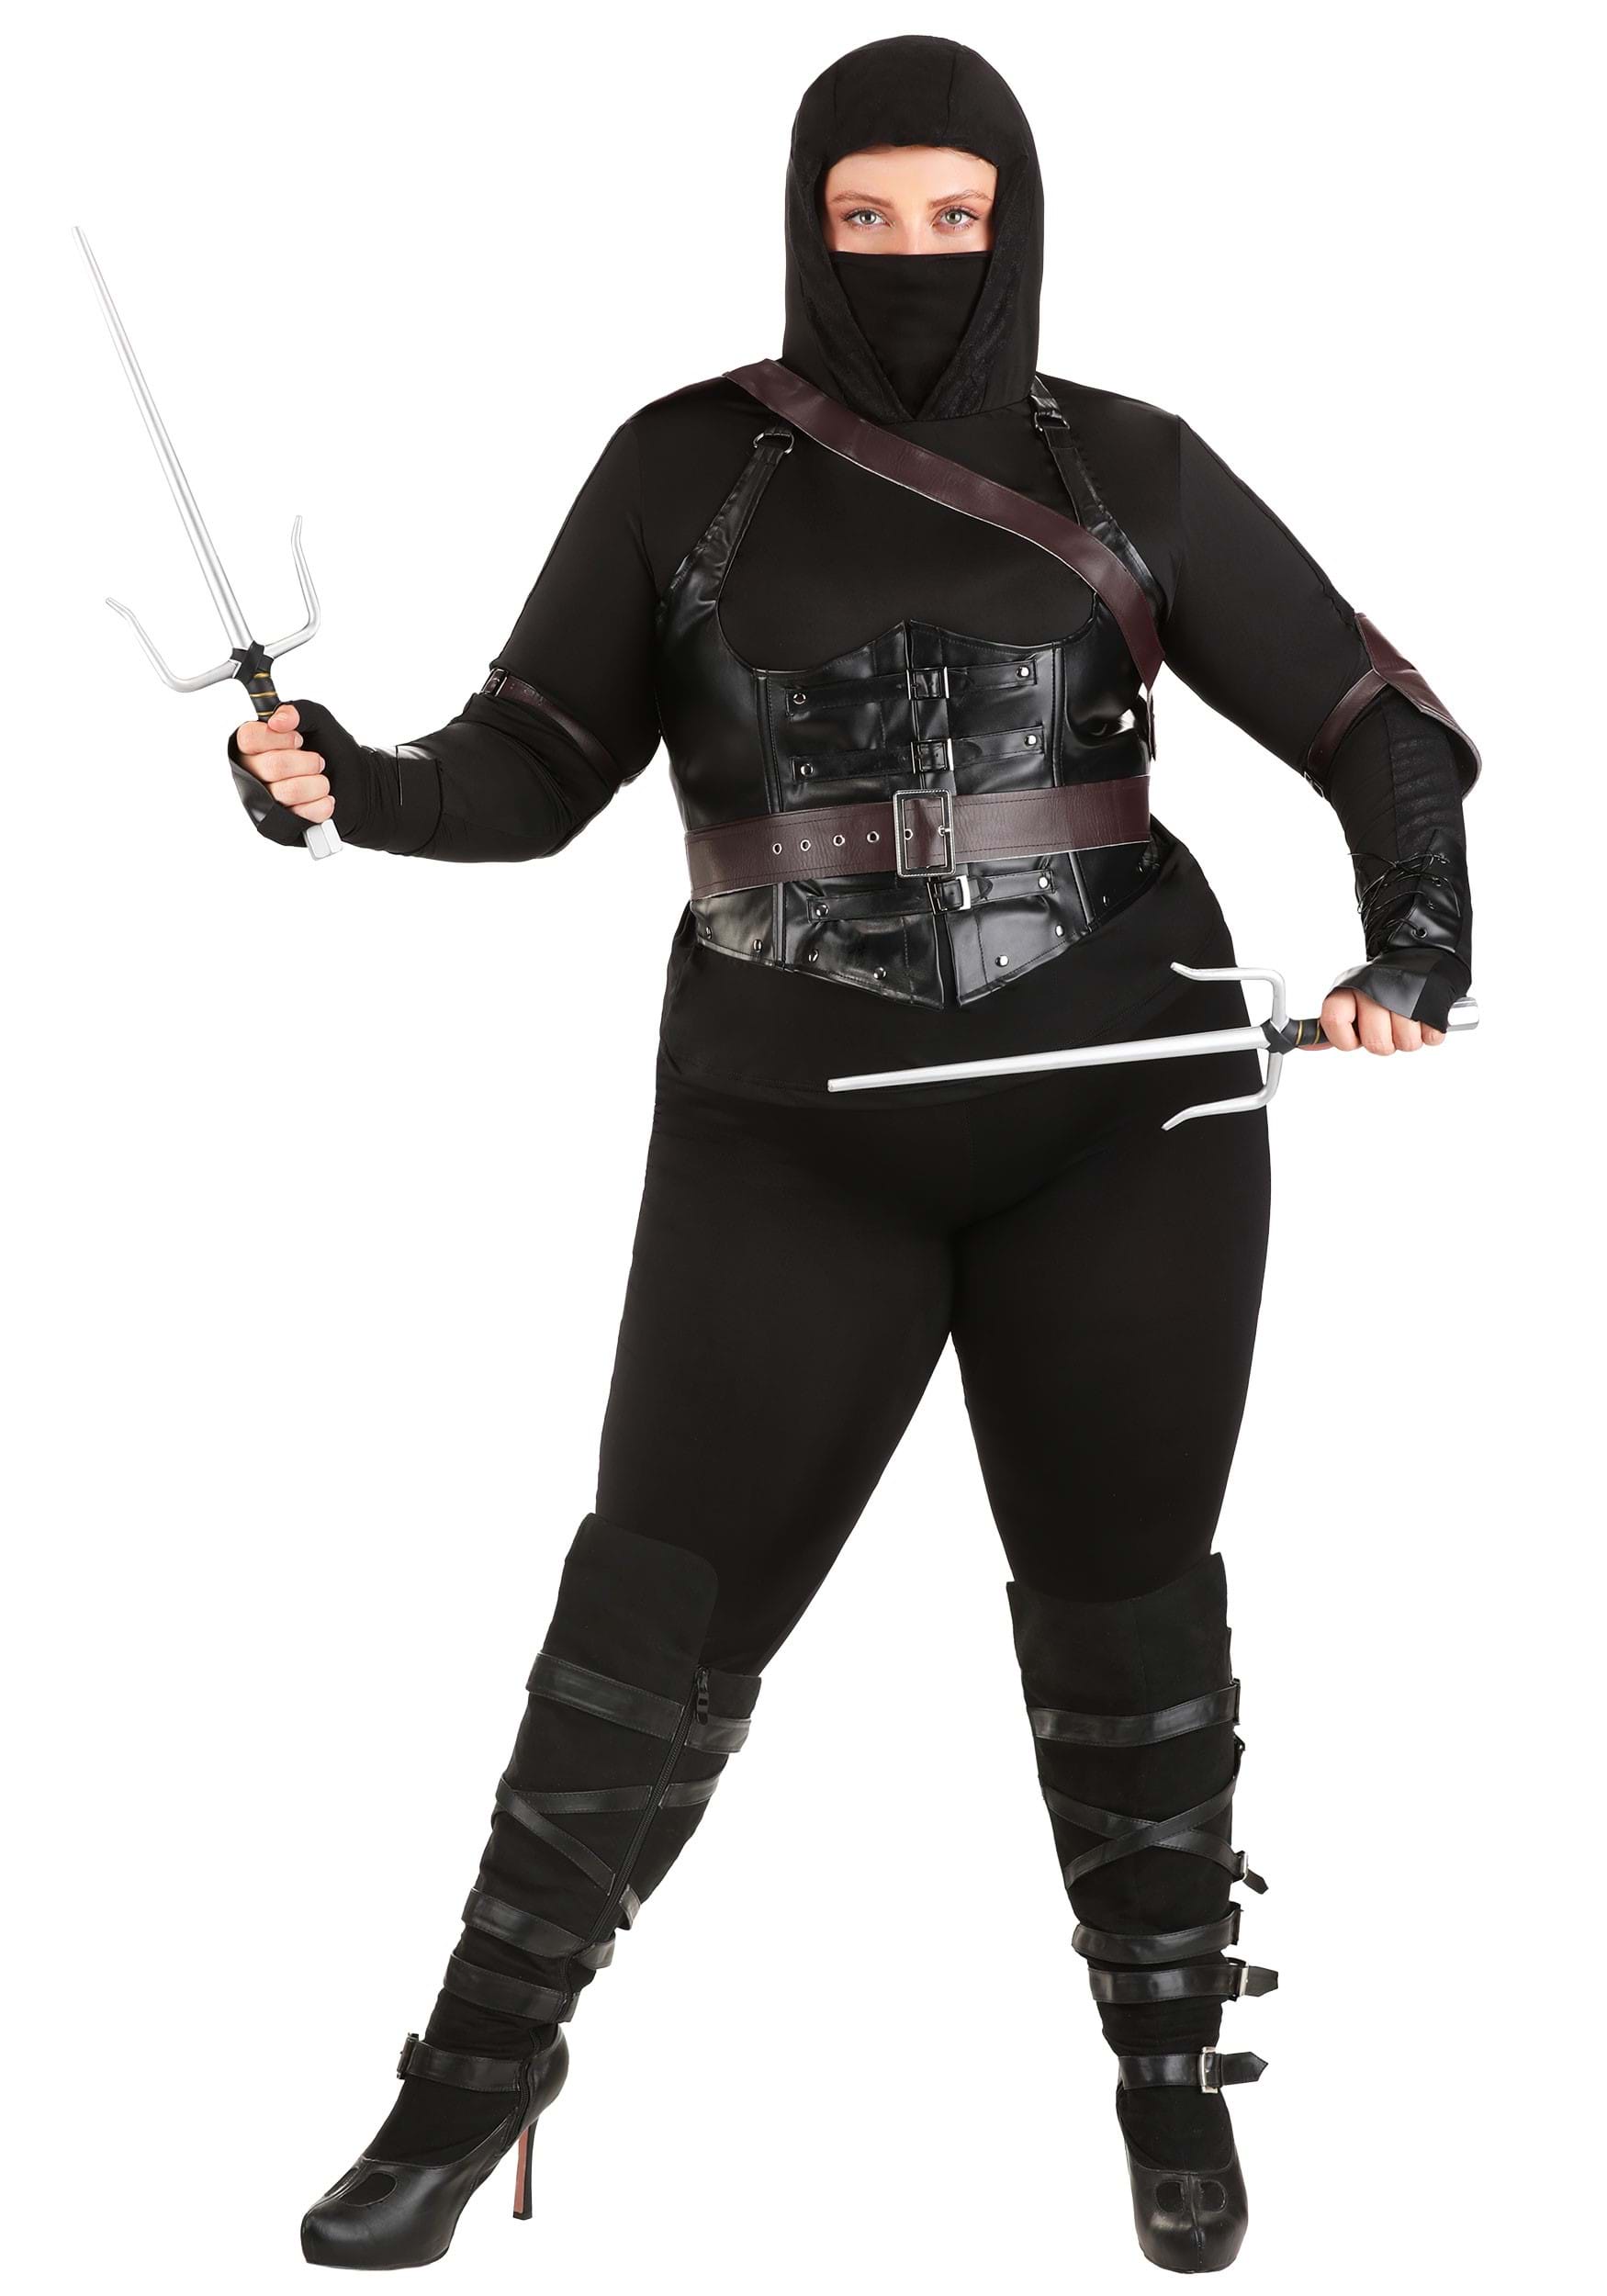 Ninja Assassin Halloween Costume for Men